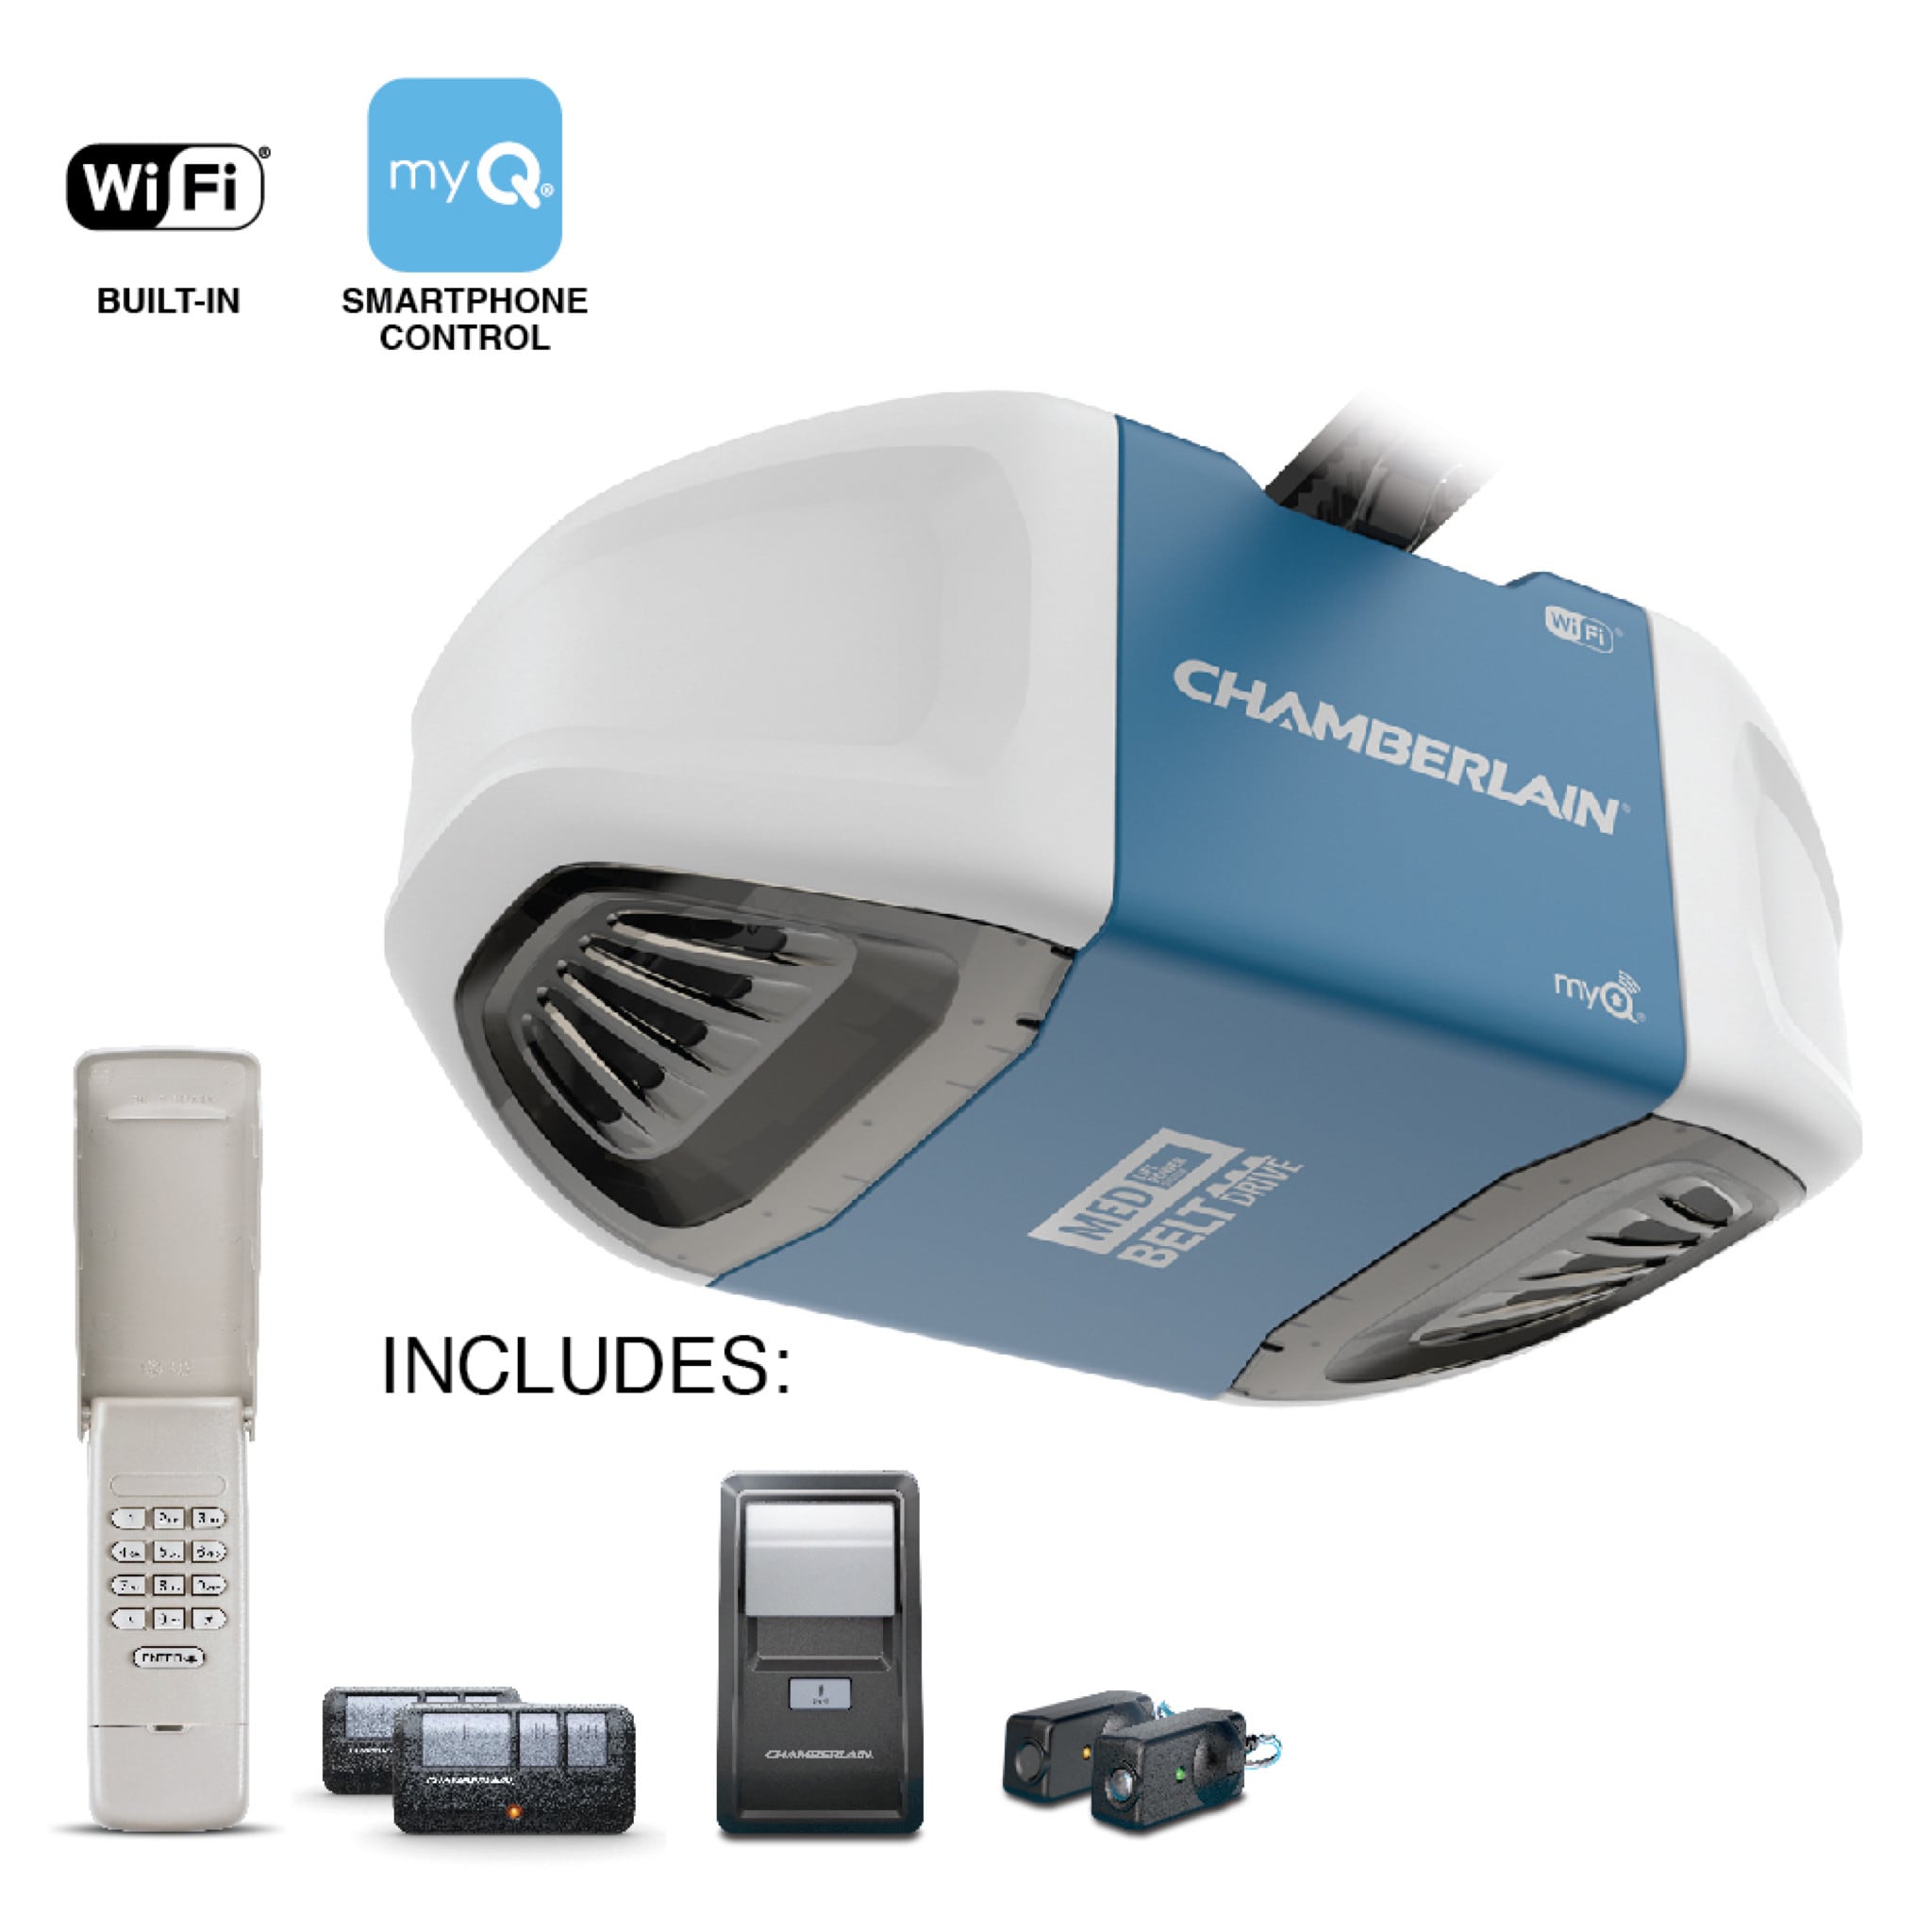 Wireless Garage Hub and Sensor with WiFi & Bluetooth White New Design Chamberlain B2405 Smart myQ Smartphone Controlled-Ultra Quiet & Smart Garage Control Smartphone Controlled